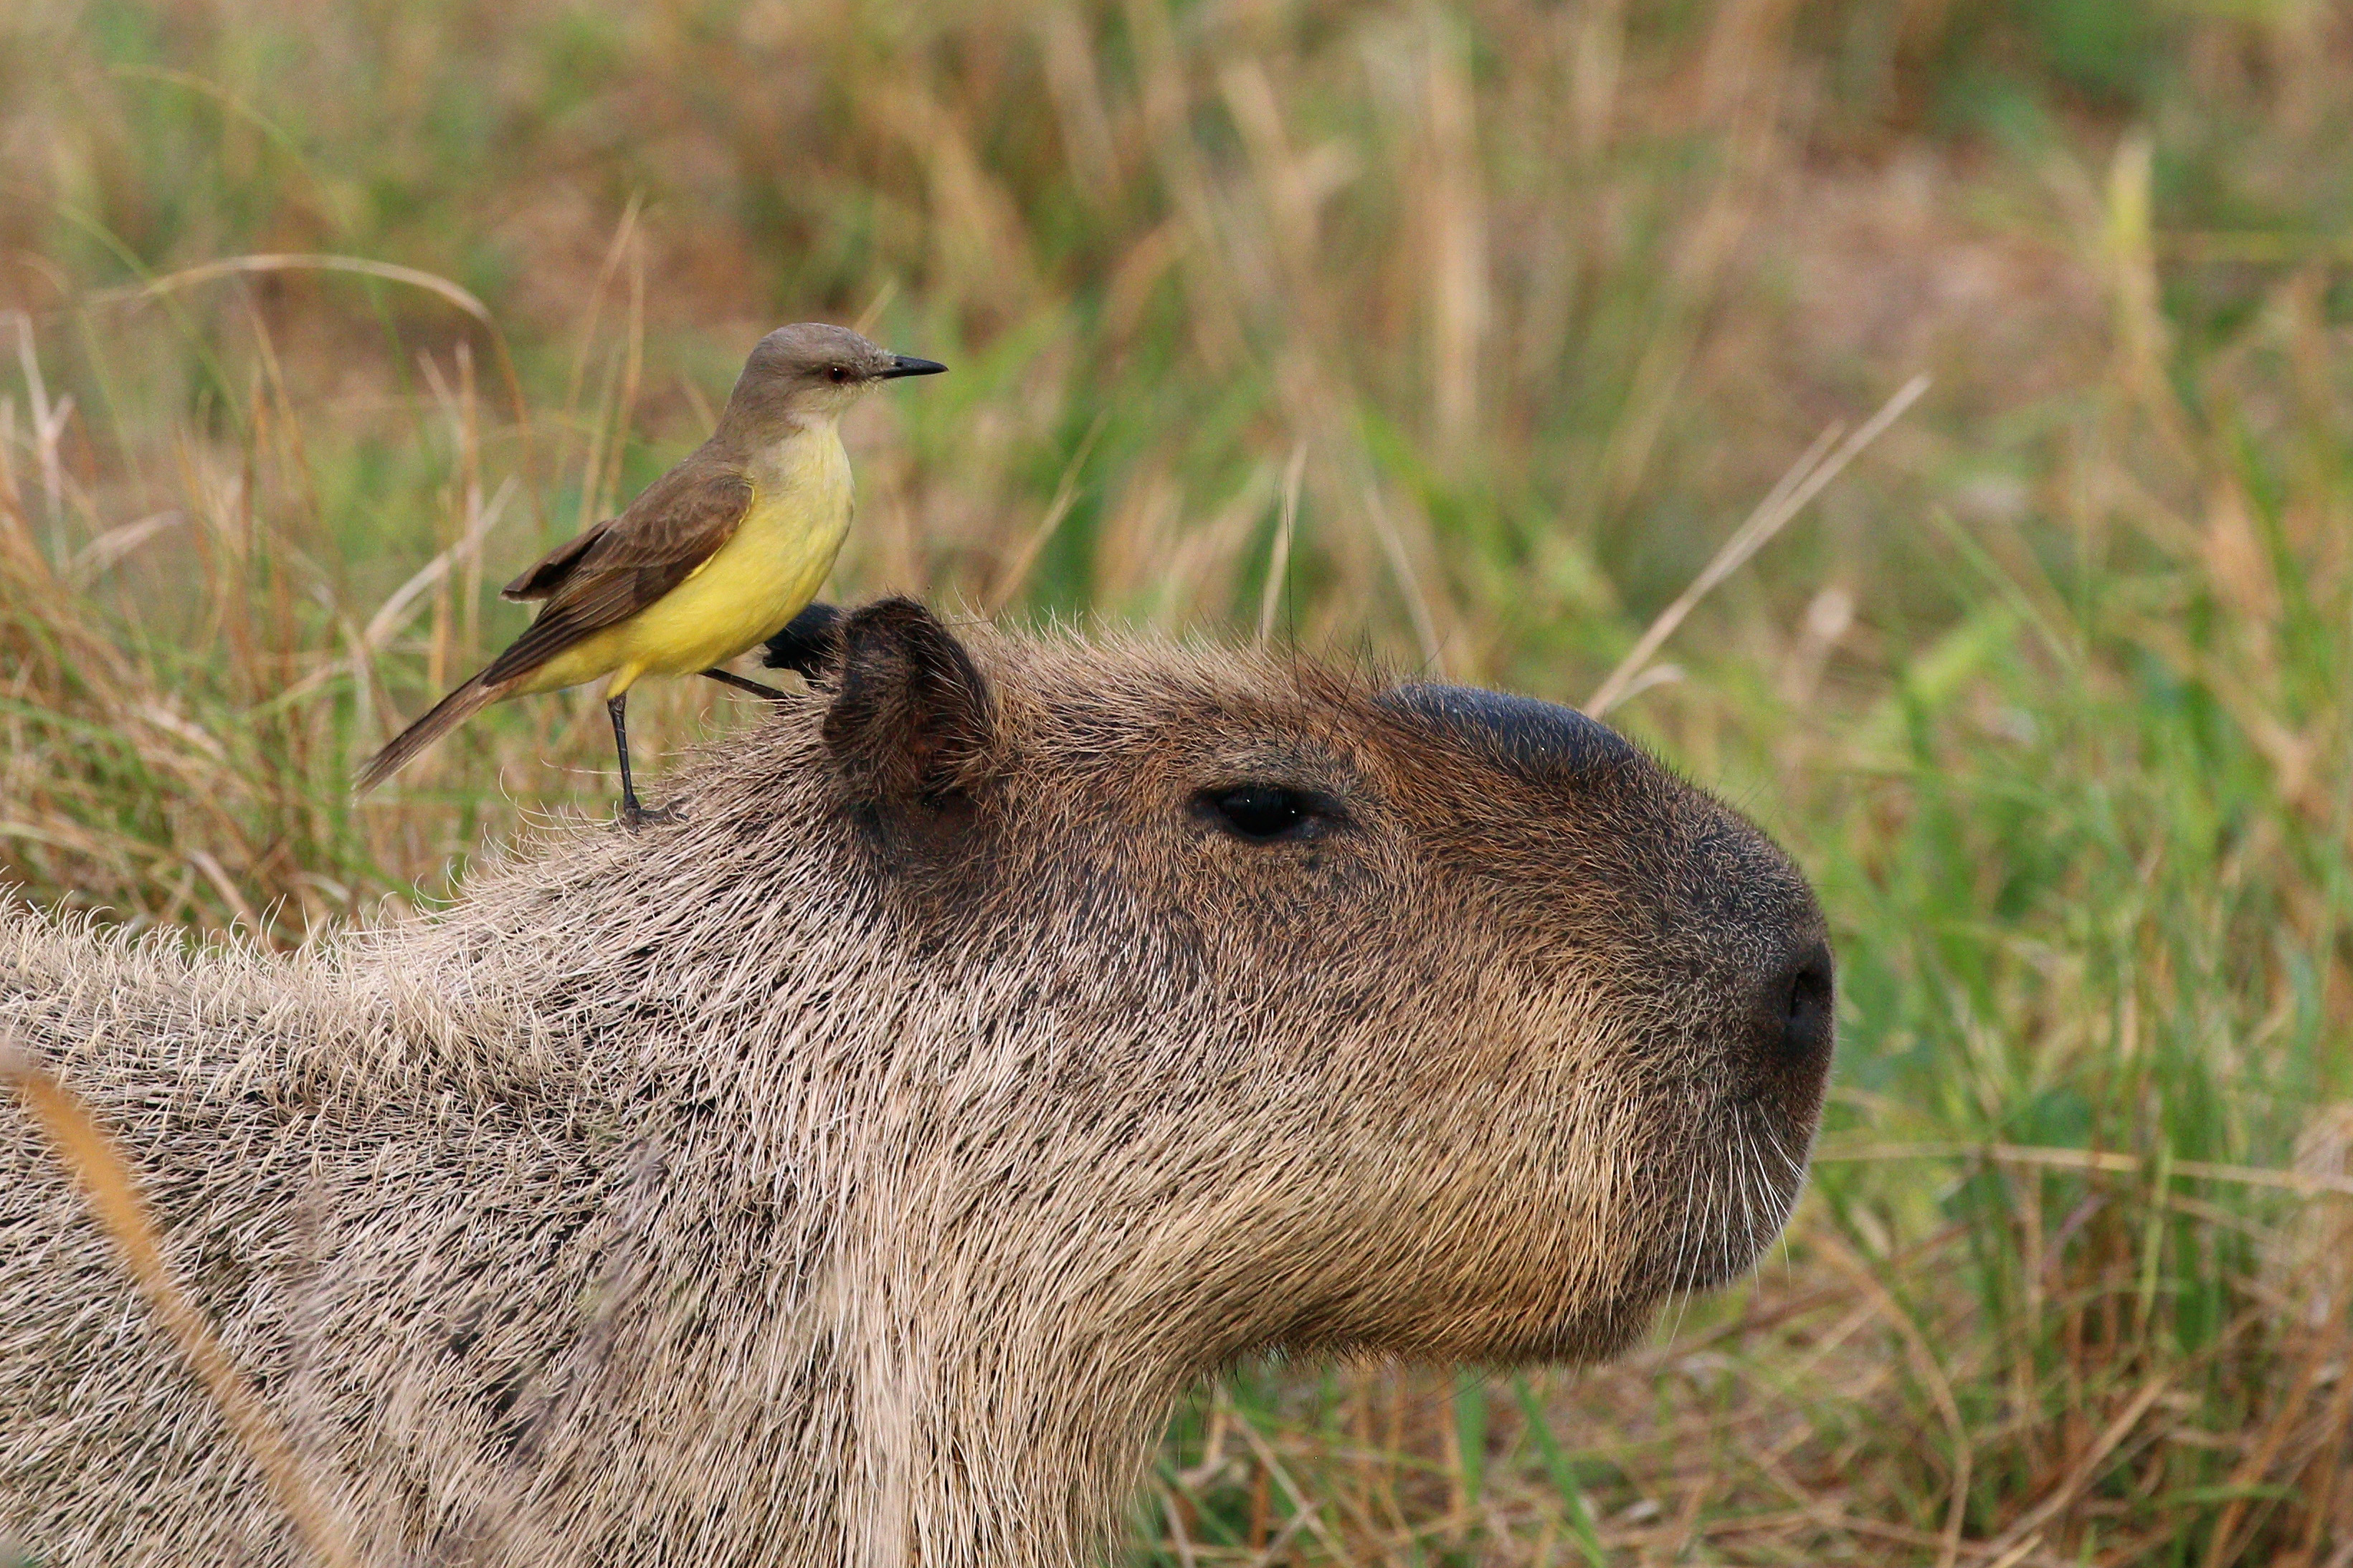 White-throated kingbird (Tyrannus albogularis) on Capybara